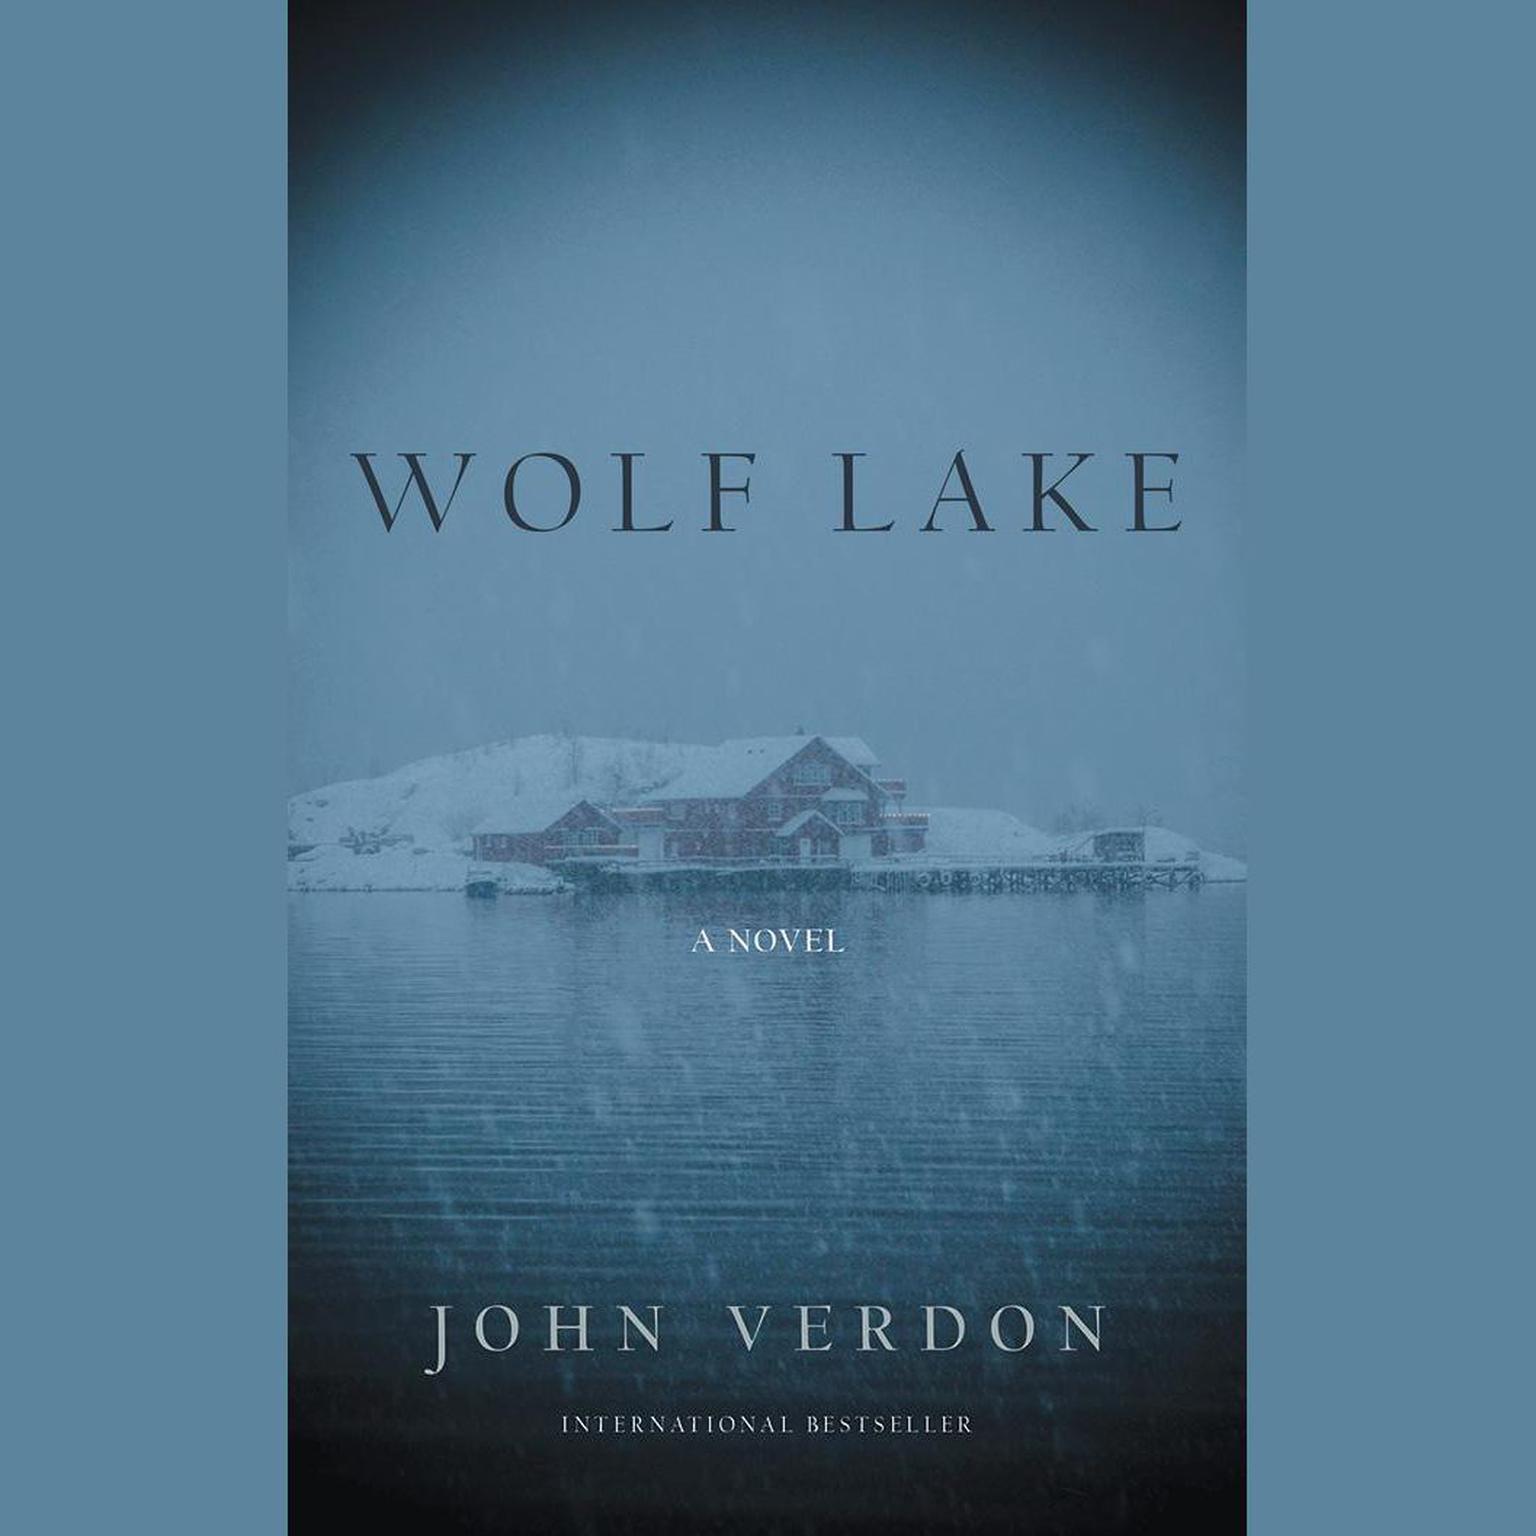 Wolf Lake: A Novel Audiobook, by John Verdon